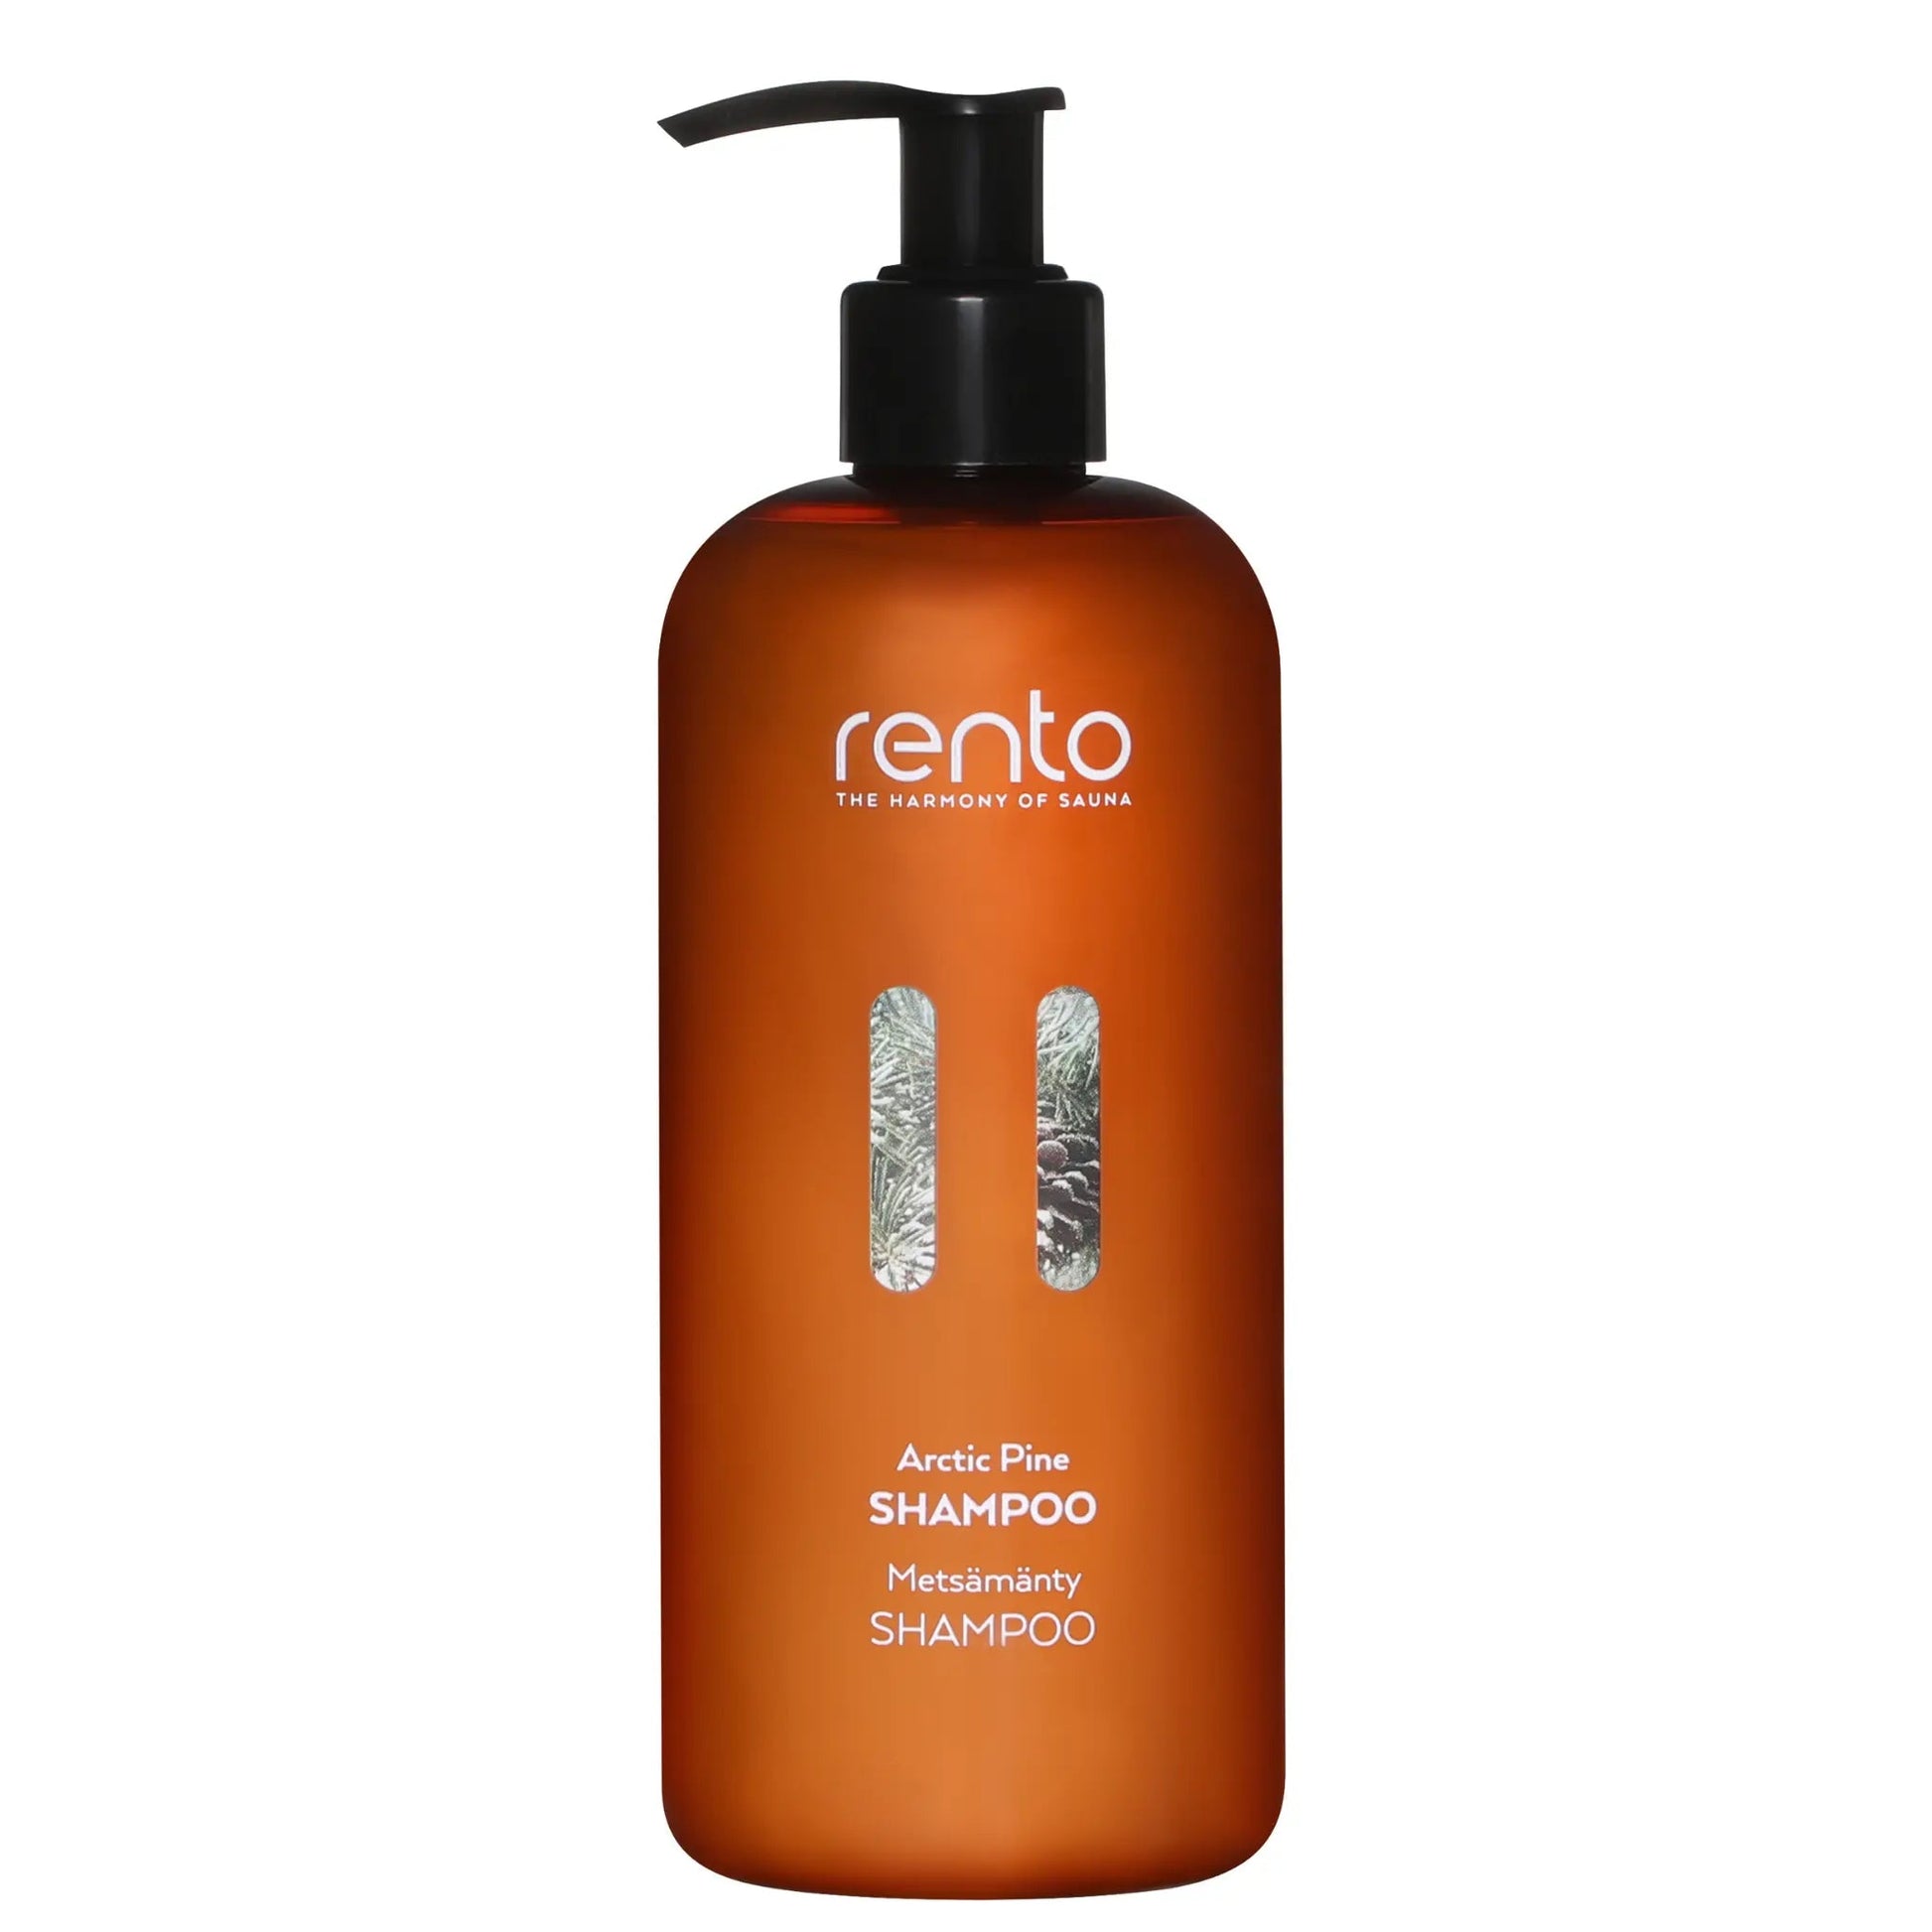 Rento Arctic Pine Shampoo 400 ml shampoo | Finnmark Sauna